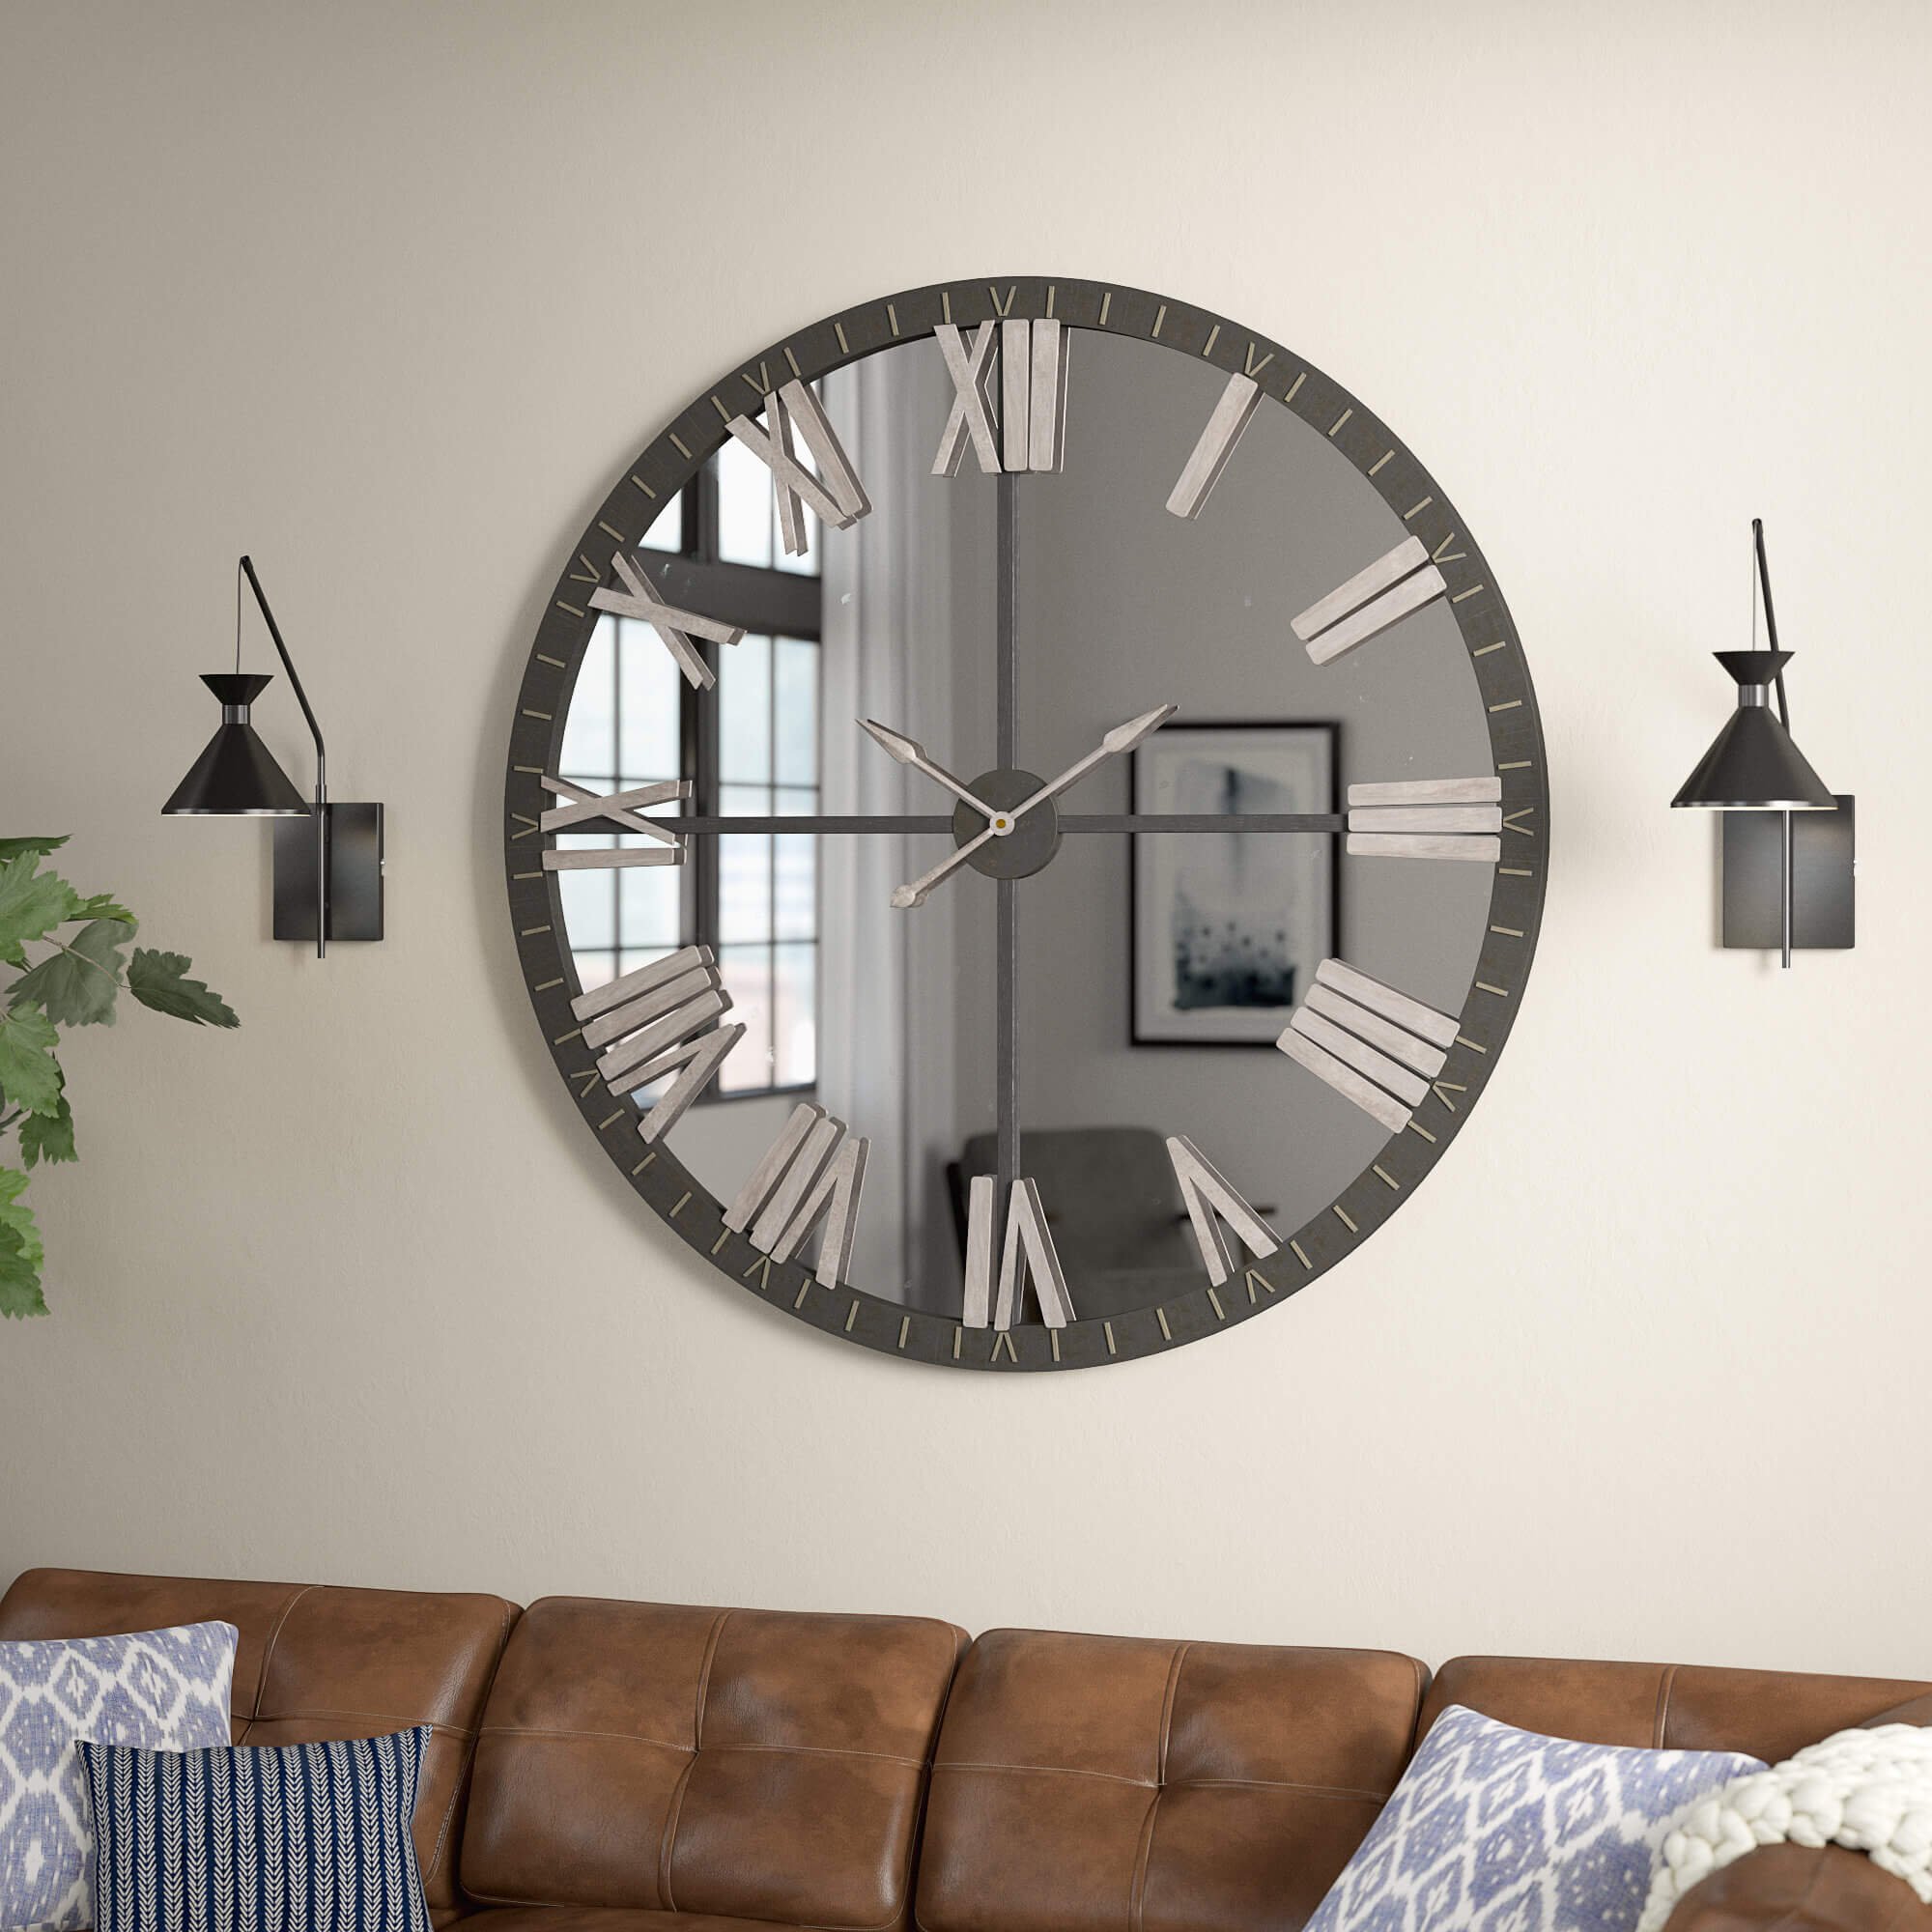 Decorative Clocks For Living Room